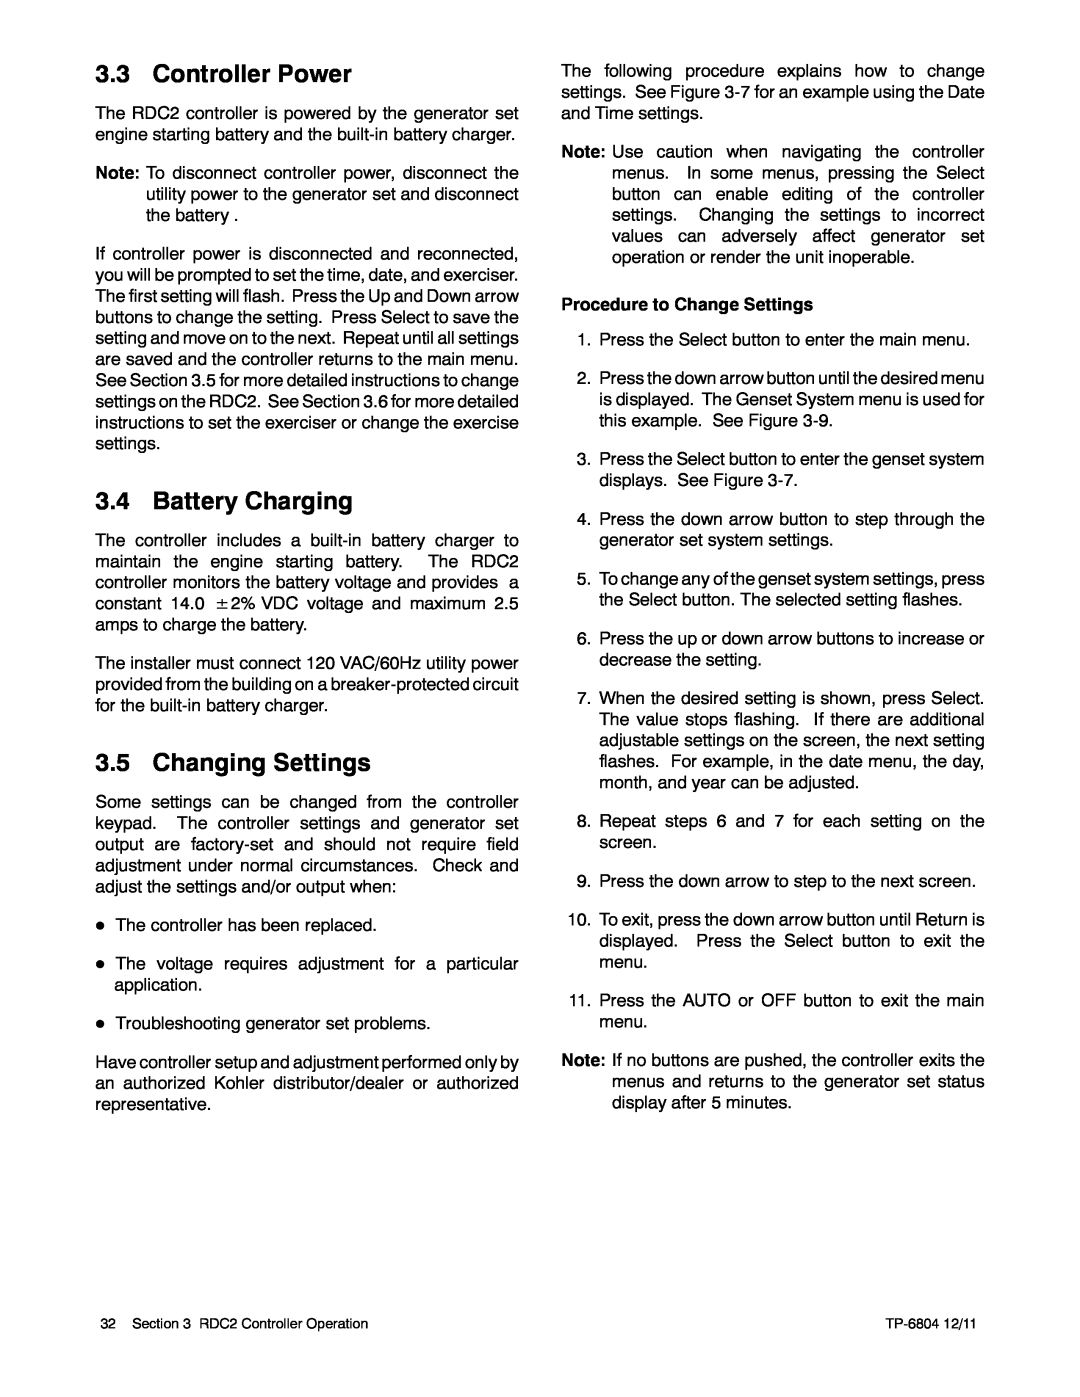 Kohler 14/20RESAL manual Controller Power, Battery Charging, Changing Settings 